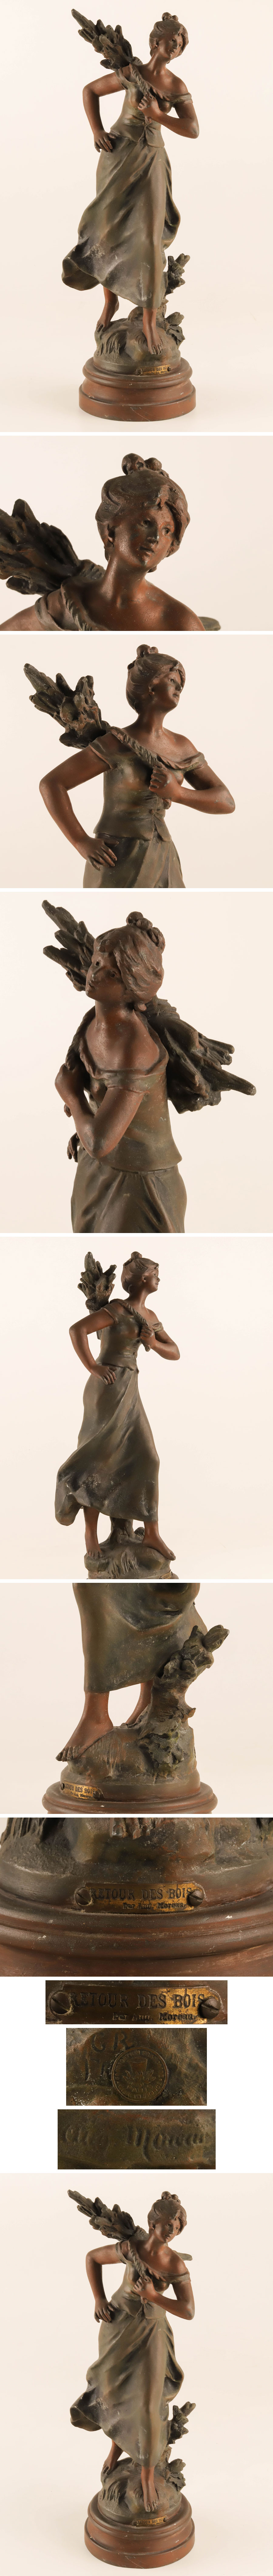 新品送料無料【琴》送料無料 古美術品 在銘 ブロンズ 銅製 婦人像置物 高40.5cm KG840 その他